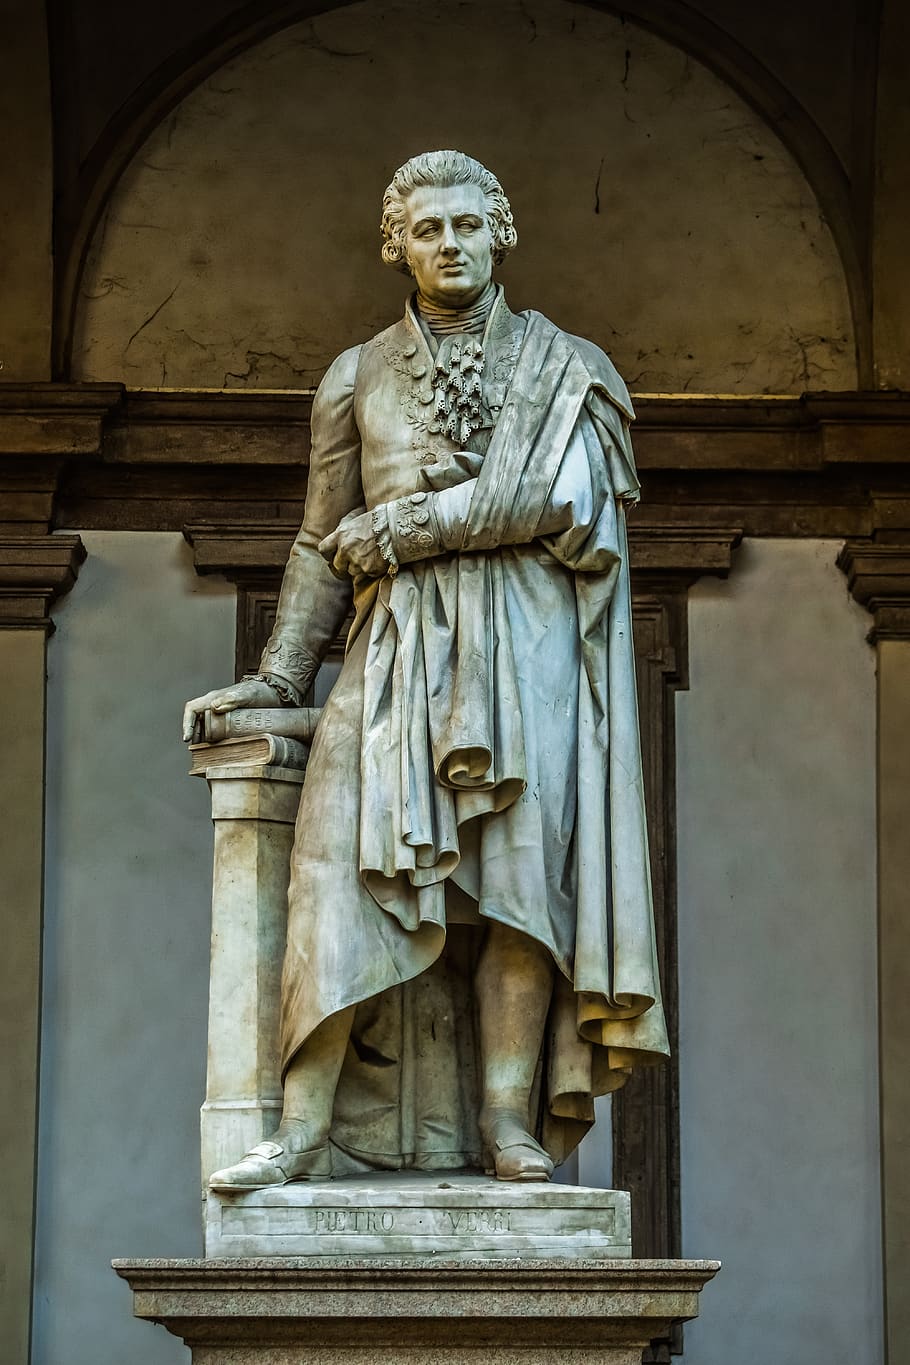 pietro verri, economista, historiador, filósofo, escritor, italiano, estátua, escultura, arquitetura, monumento